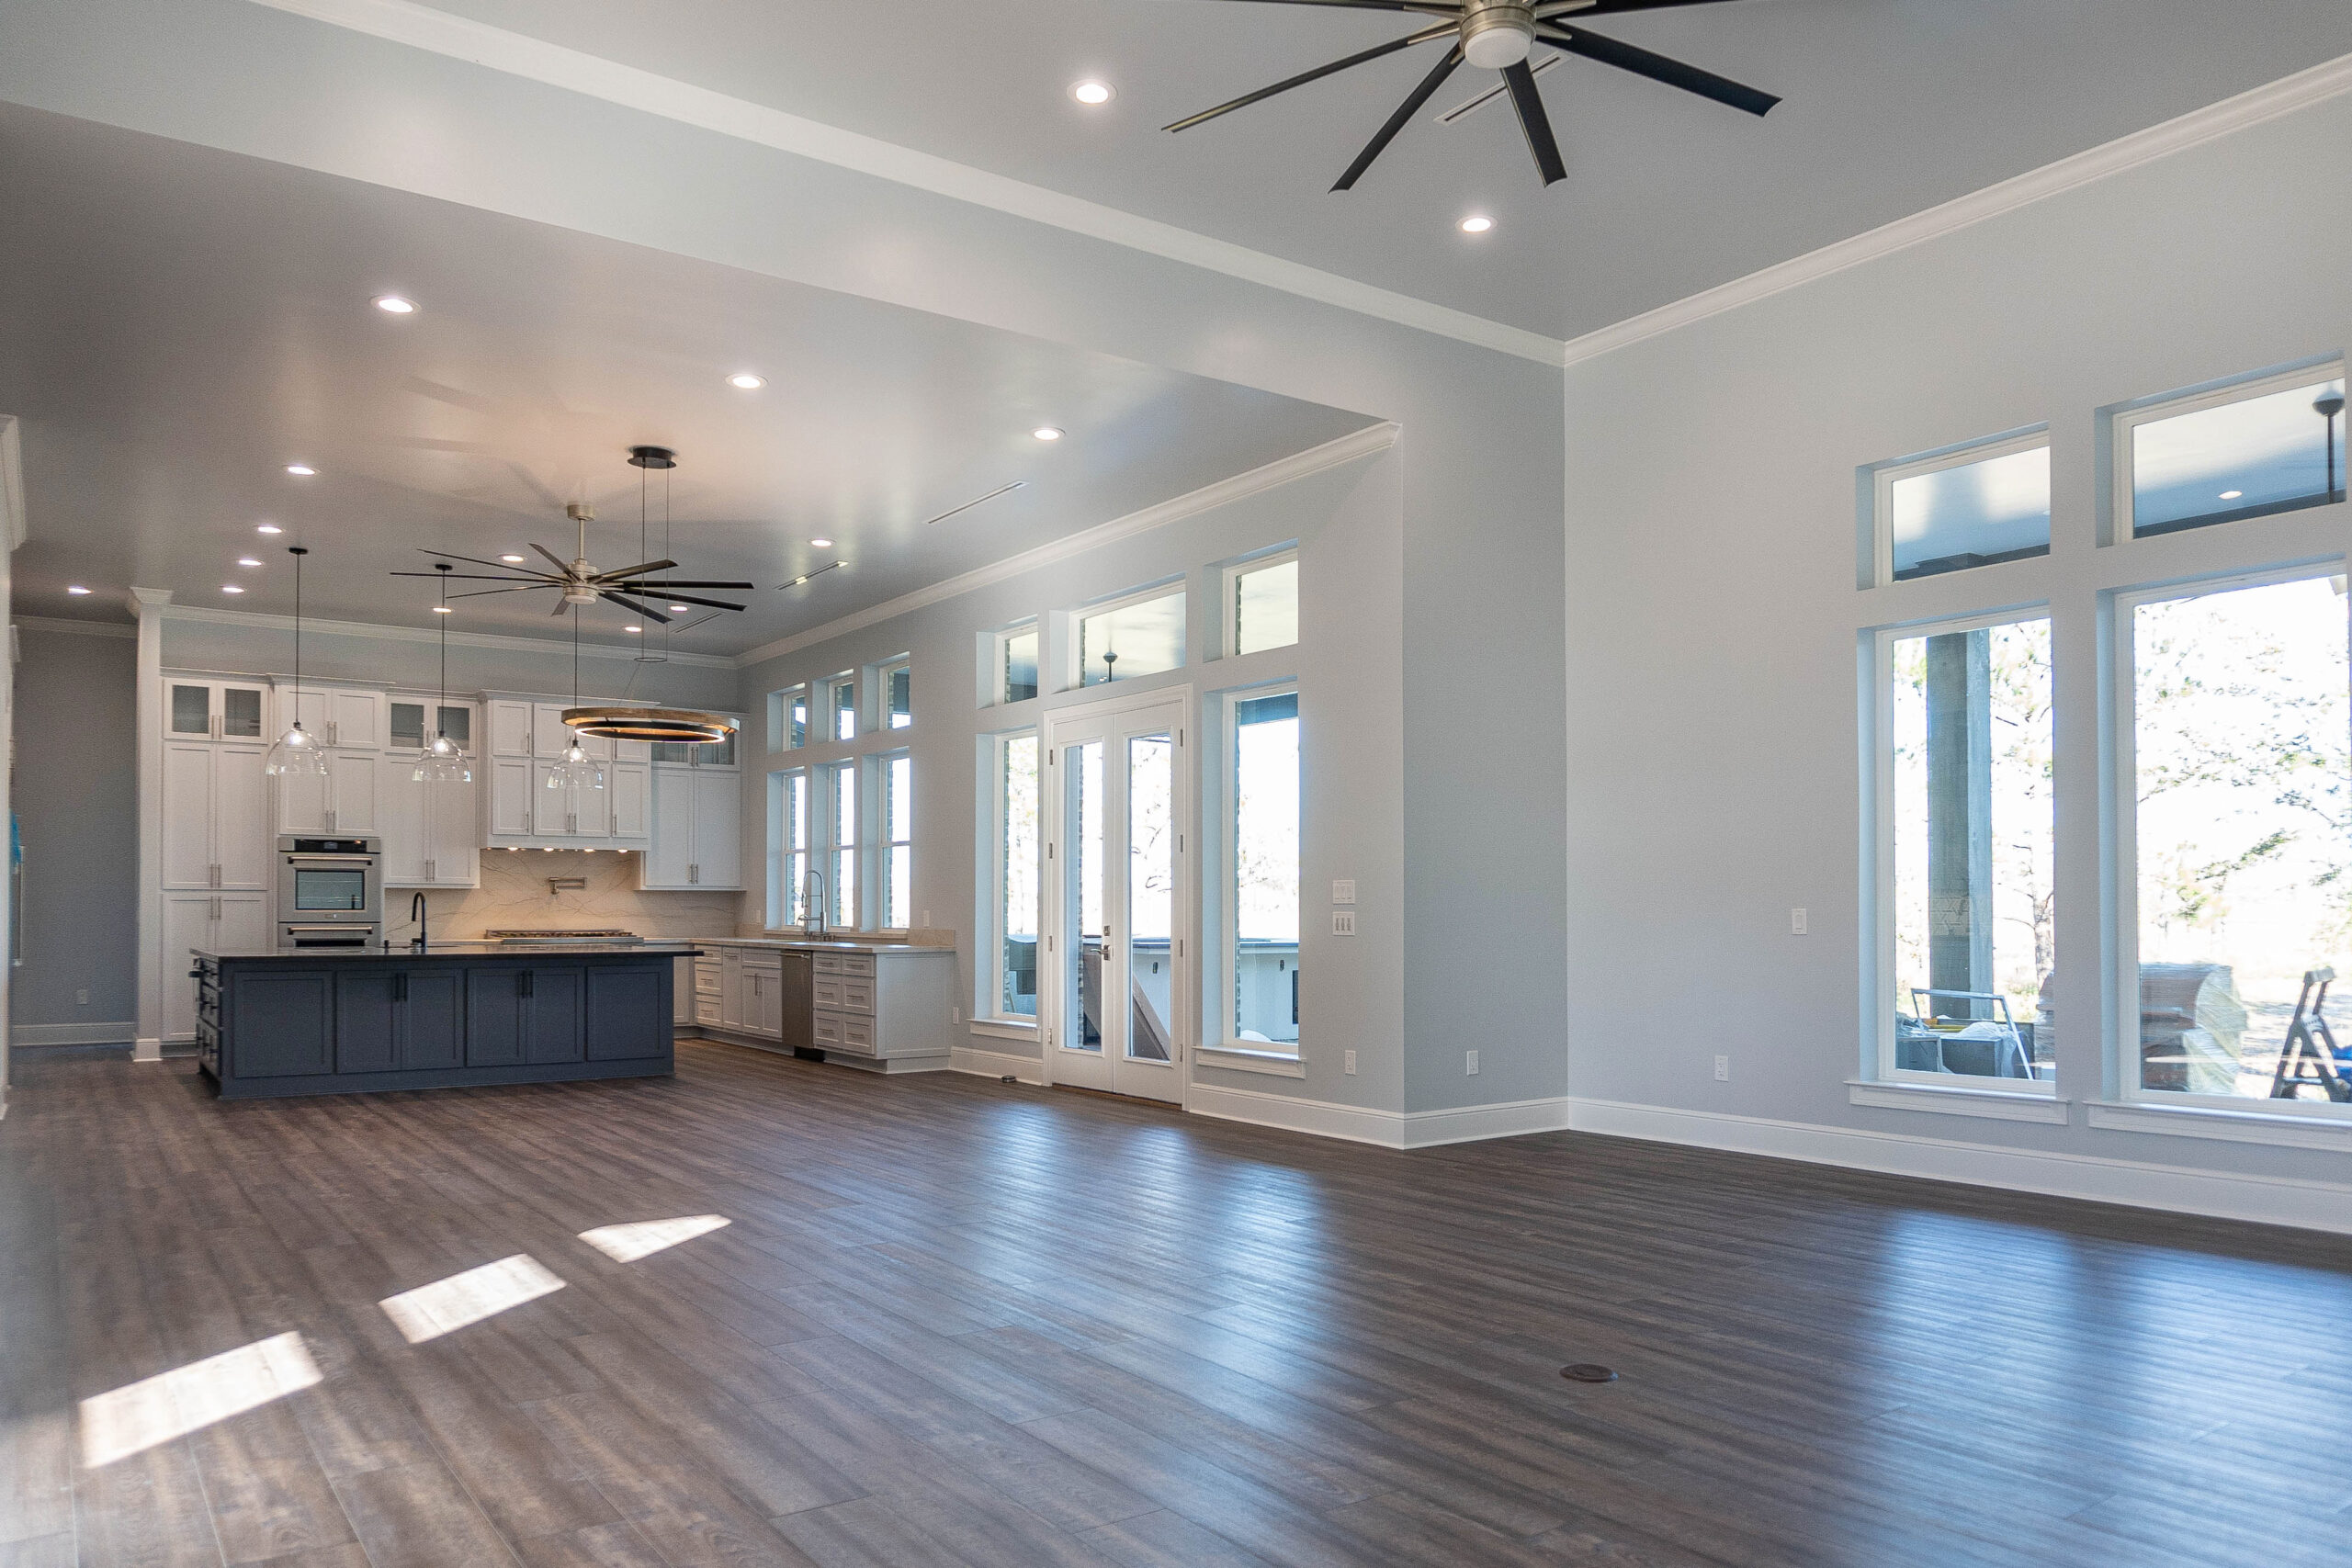 Boyt modern home interior gray tile floor blue kitchen island white cabinets ceiling fan circular light pendant lighting